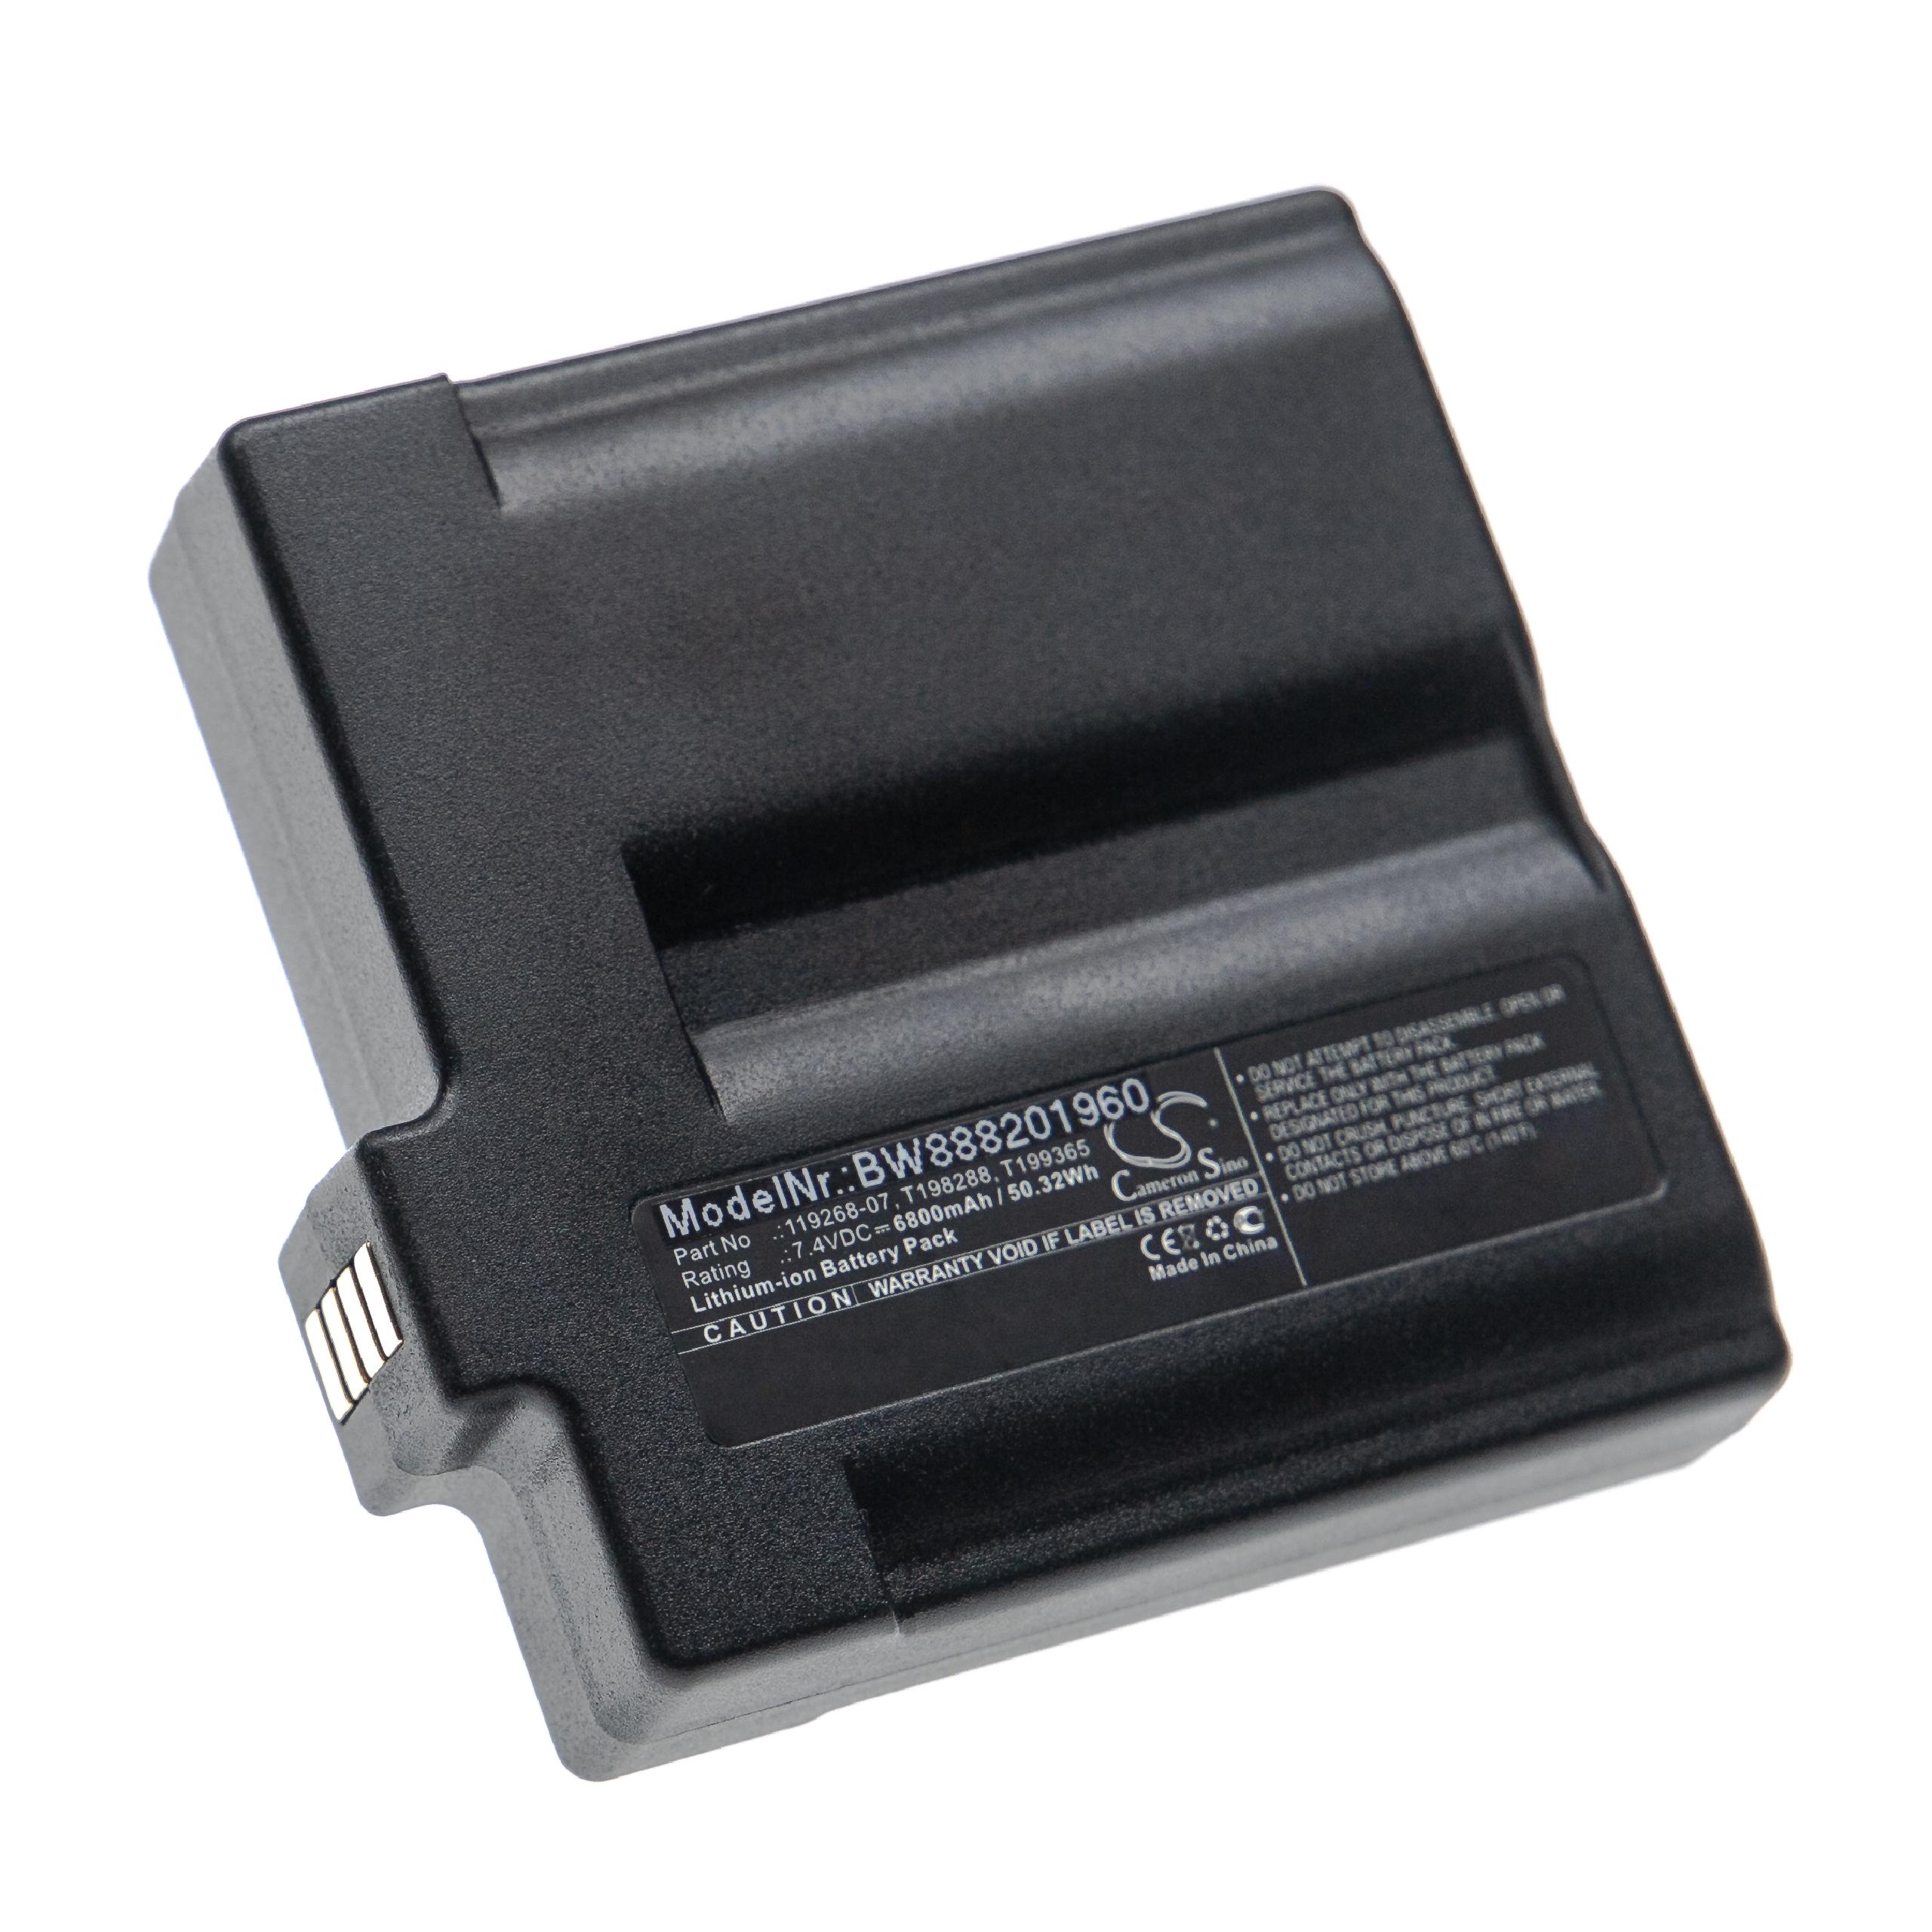 Batería reemplaza Flir T198288, 119268-07, T199365 para cámara de imagen térmica Flir - 6800 mAh 7,4 V Li-Ion